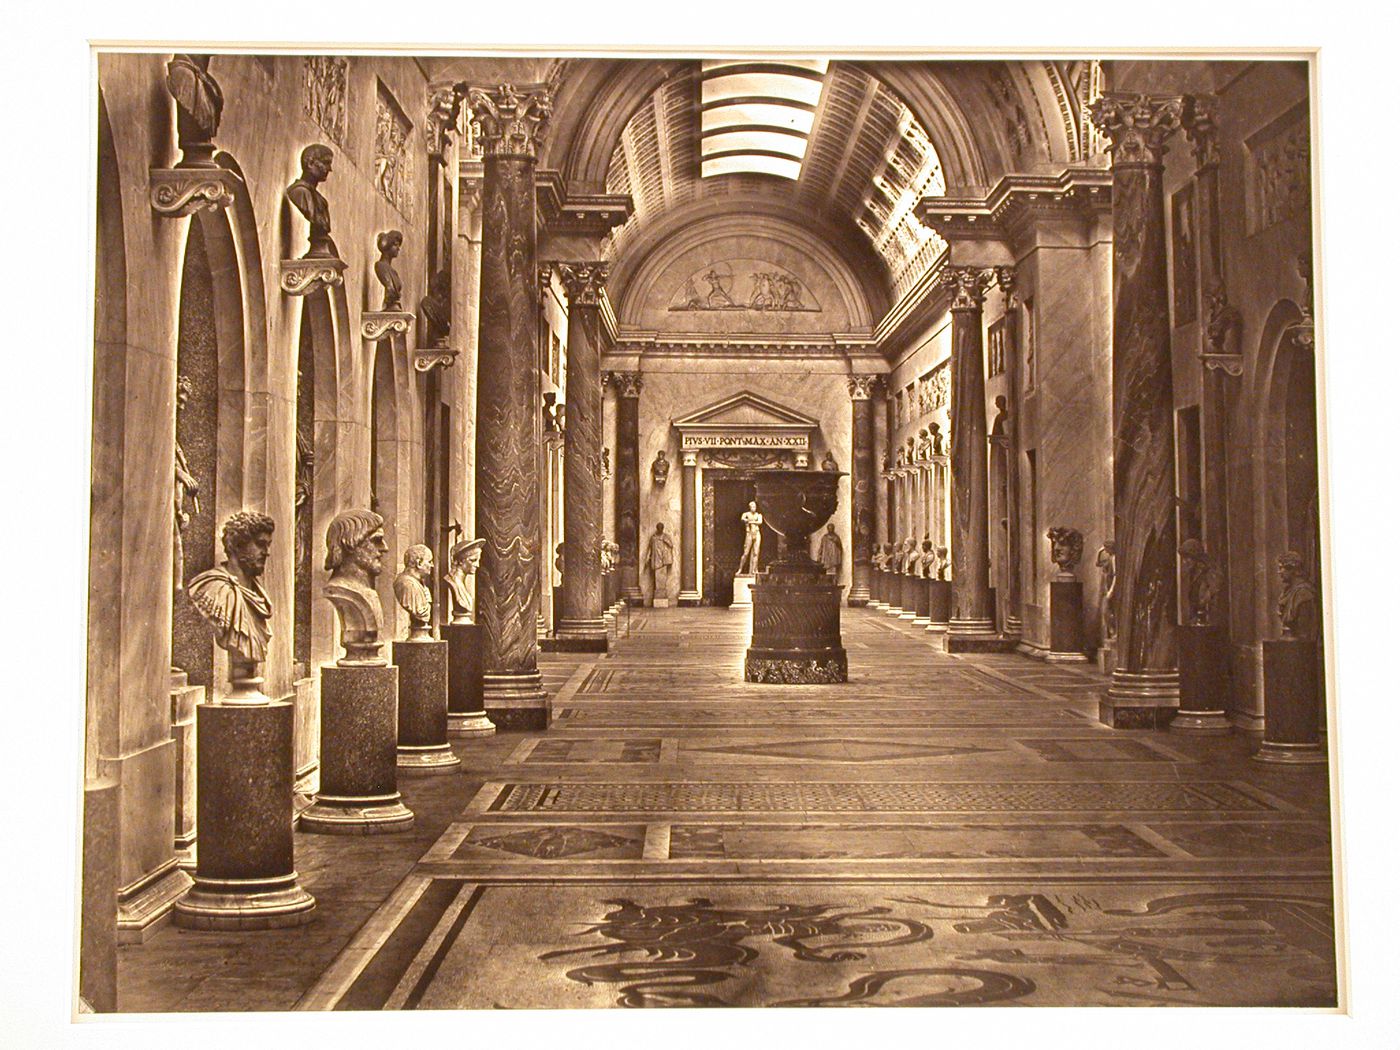 Vatican Galleries: Braccio Nuovo interior view of gallery displaying antique sculpture, Vatican City